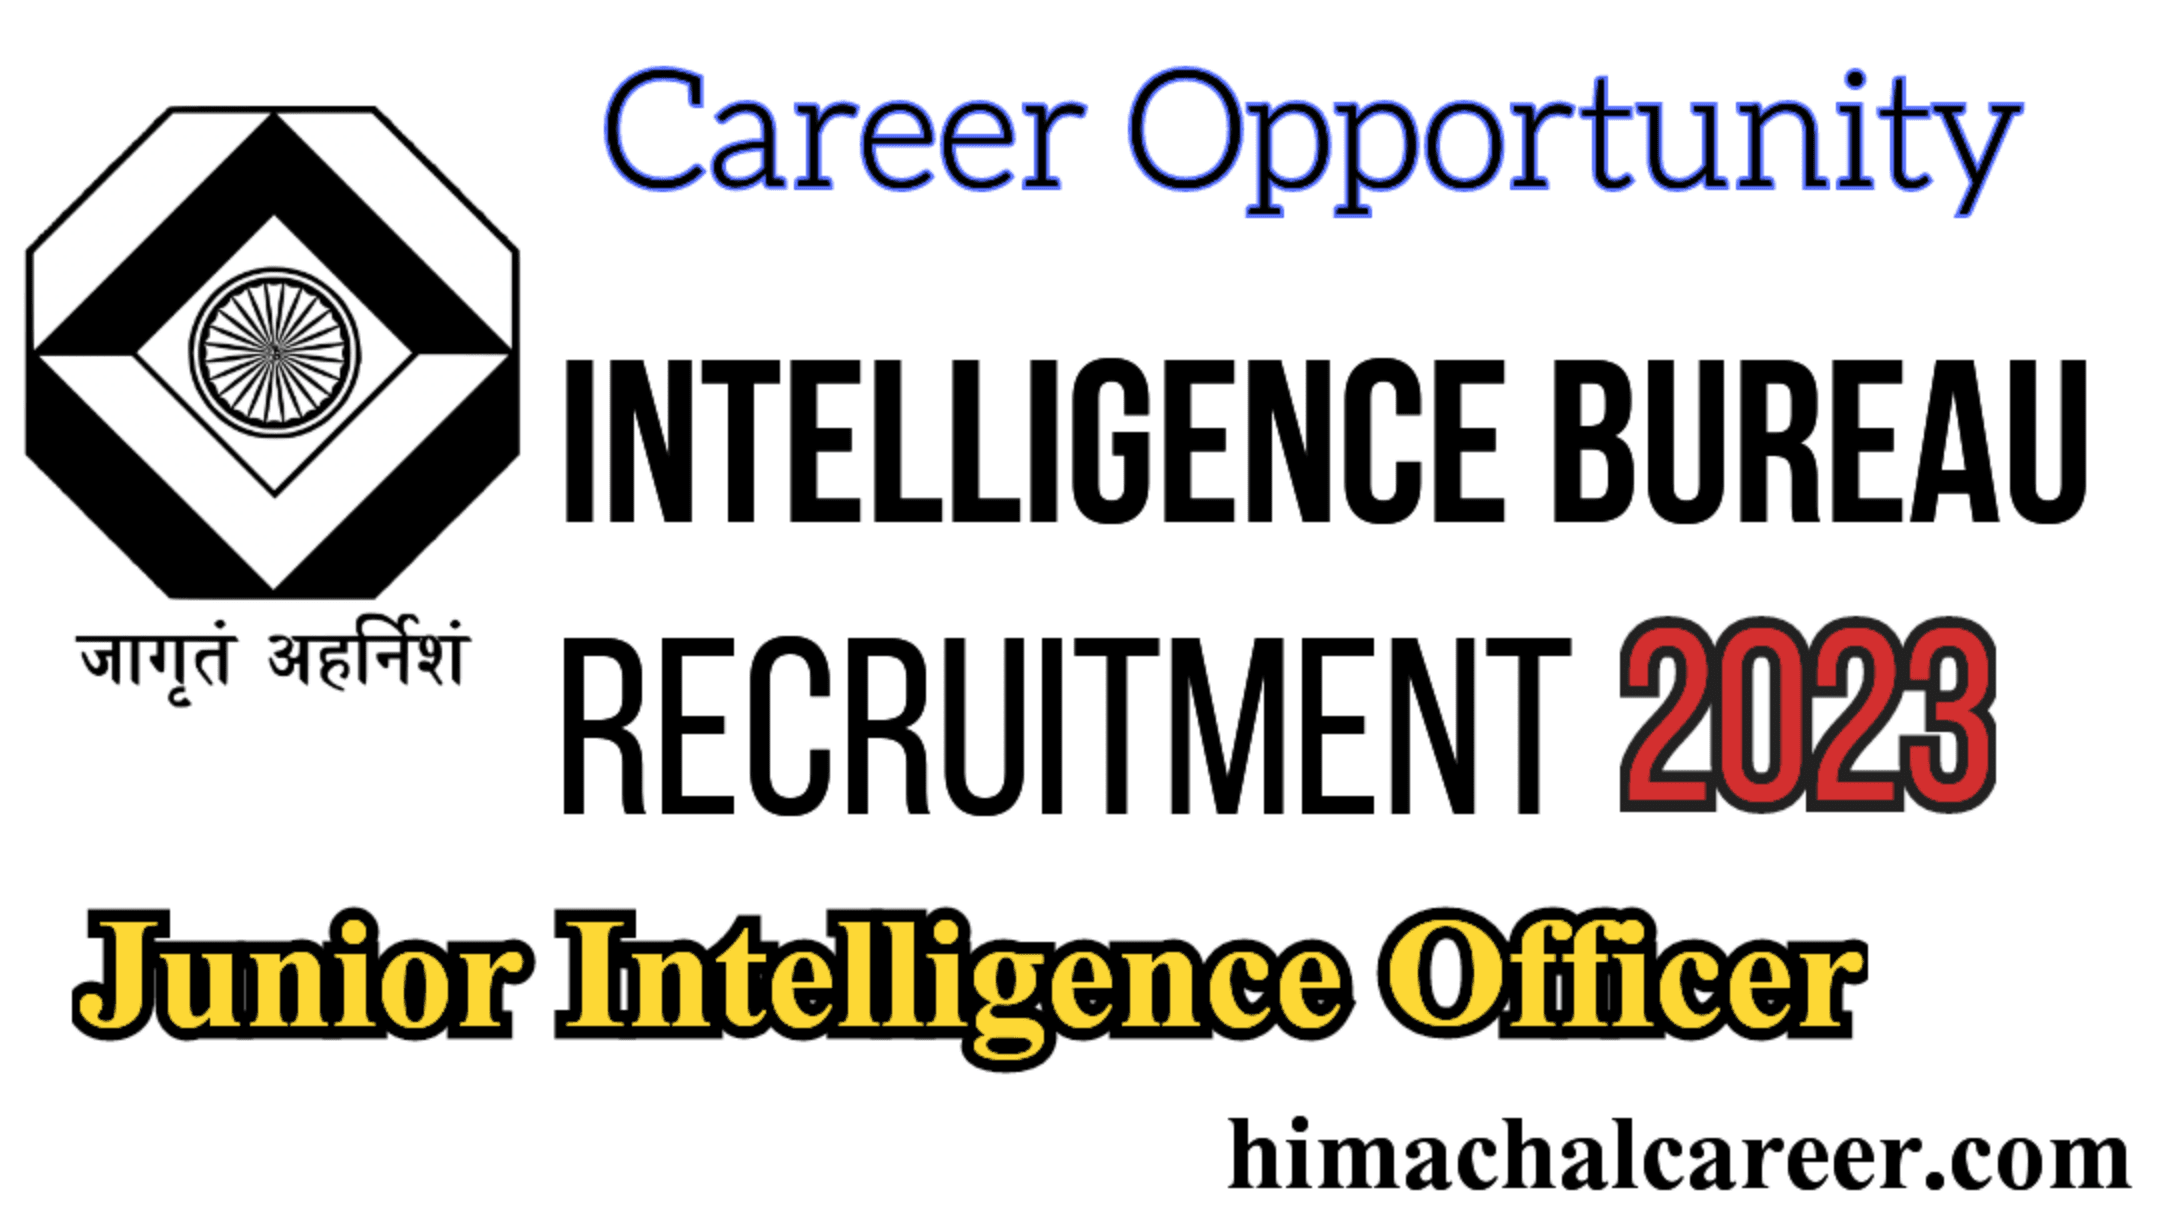 Career Opportunity Intelligence Bureau Recruitment 2023